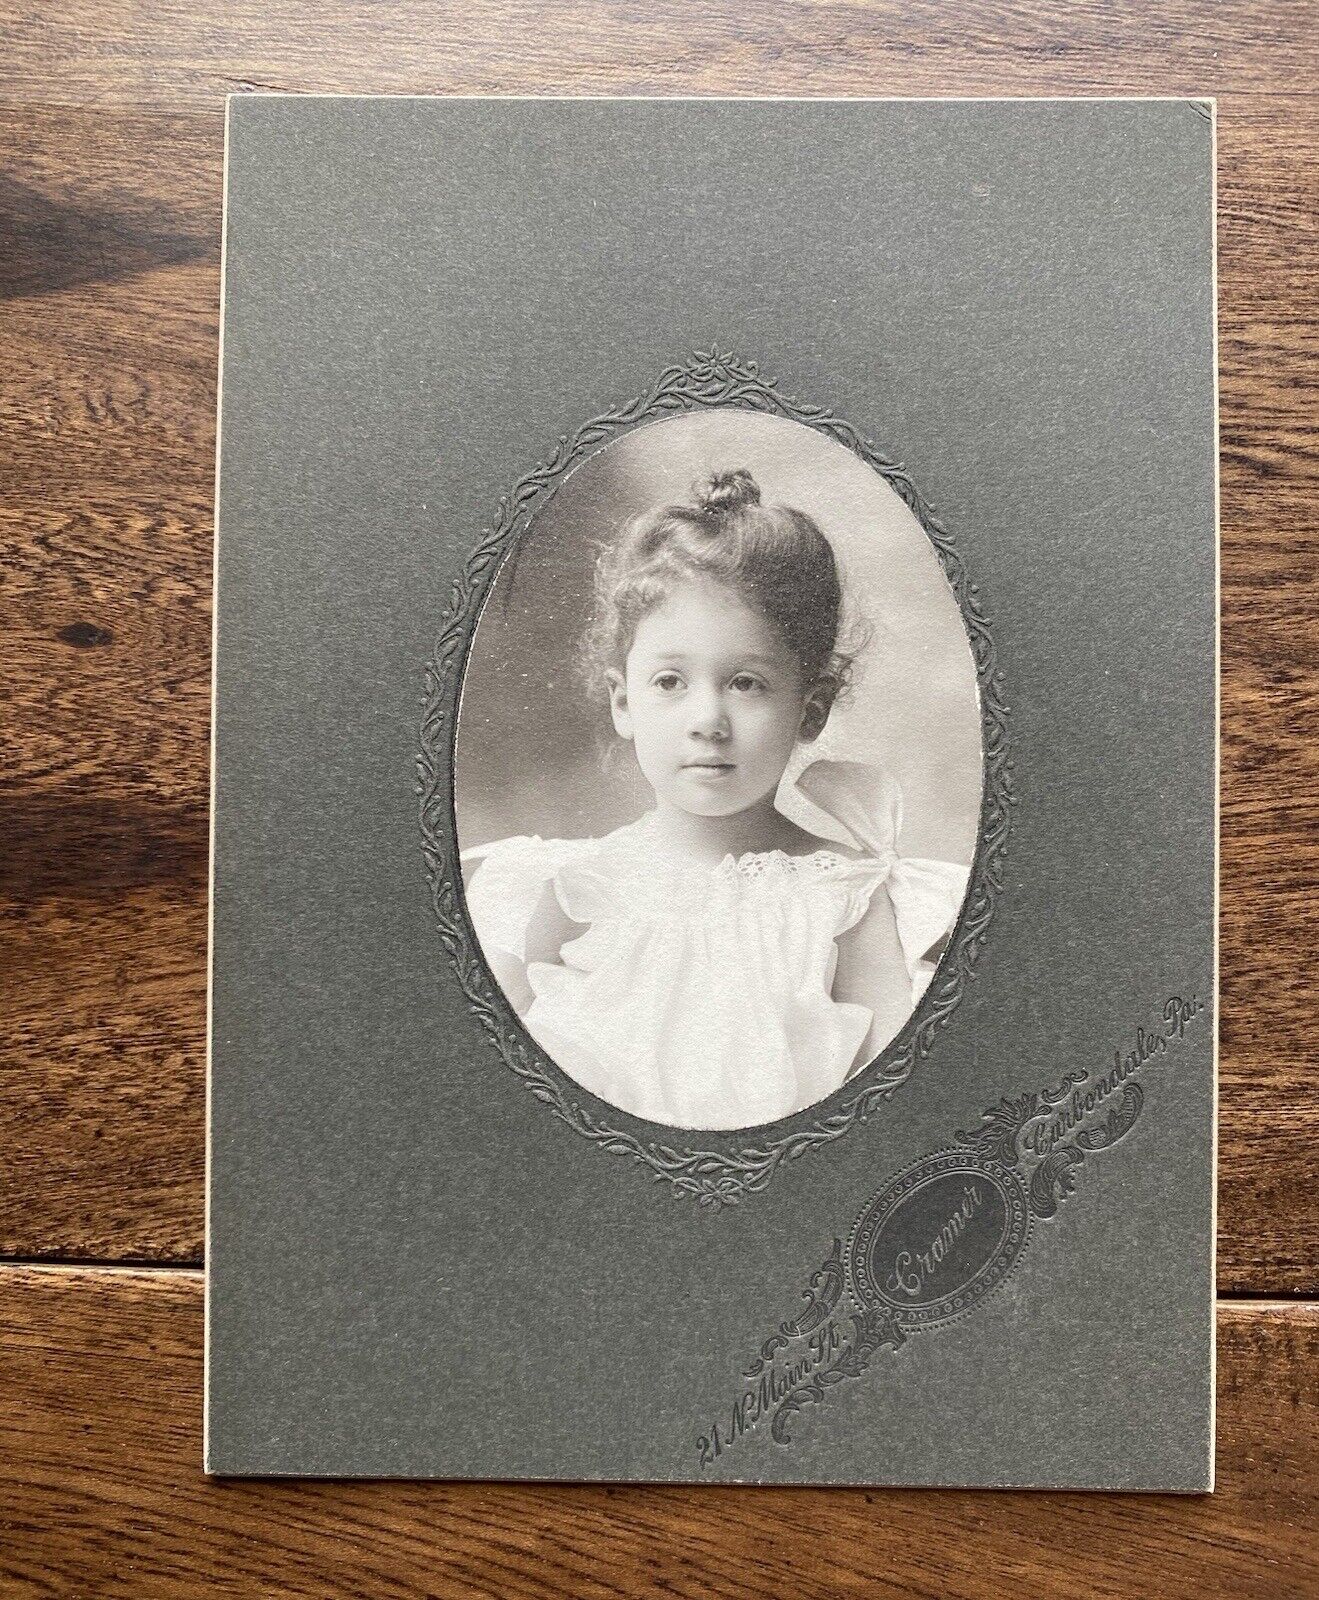 Pennsylvania Pretty Girl Tiny Hair Bun & Lace Dress Cabinet Card Carbondale PA